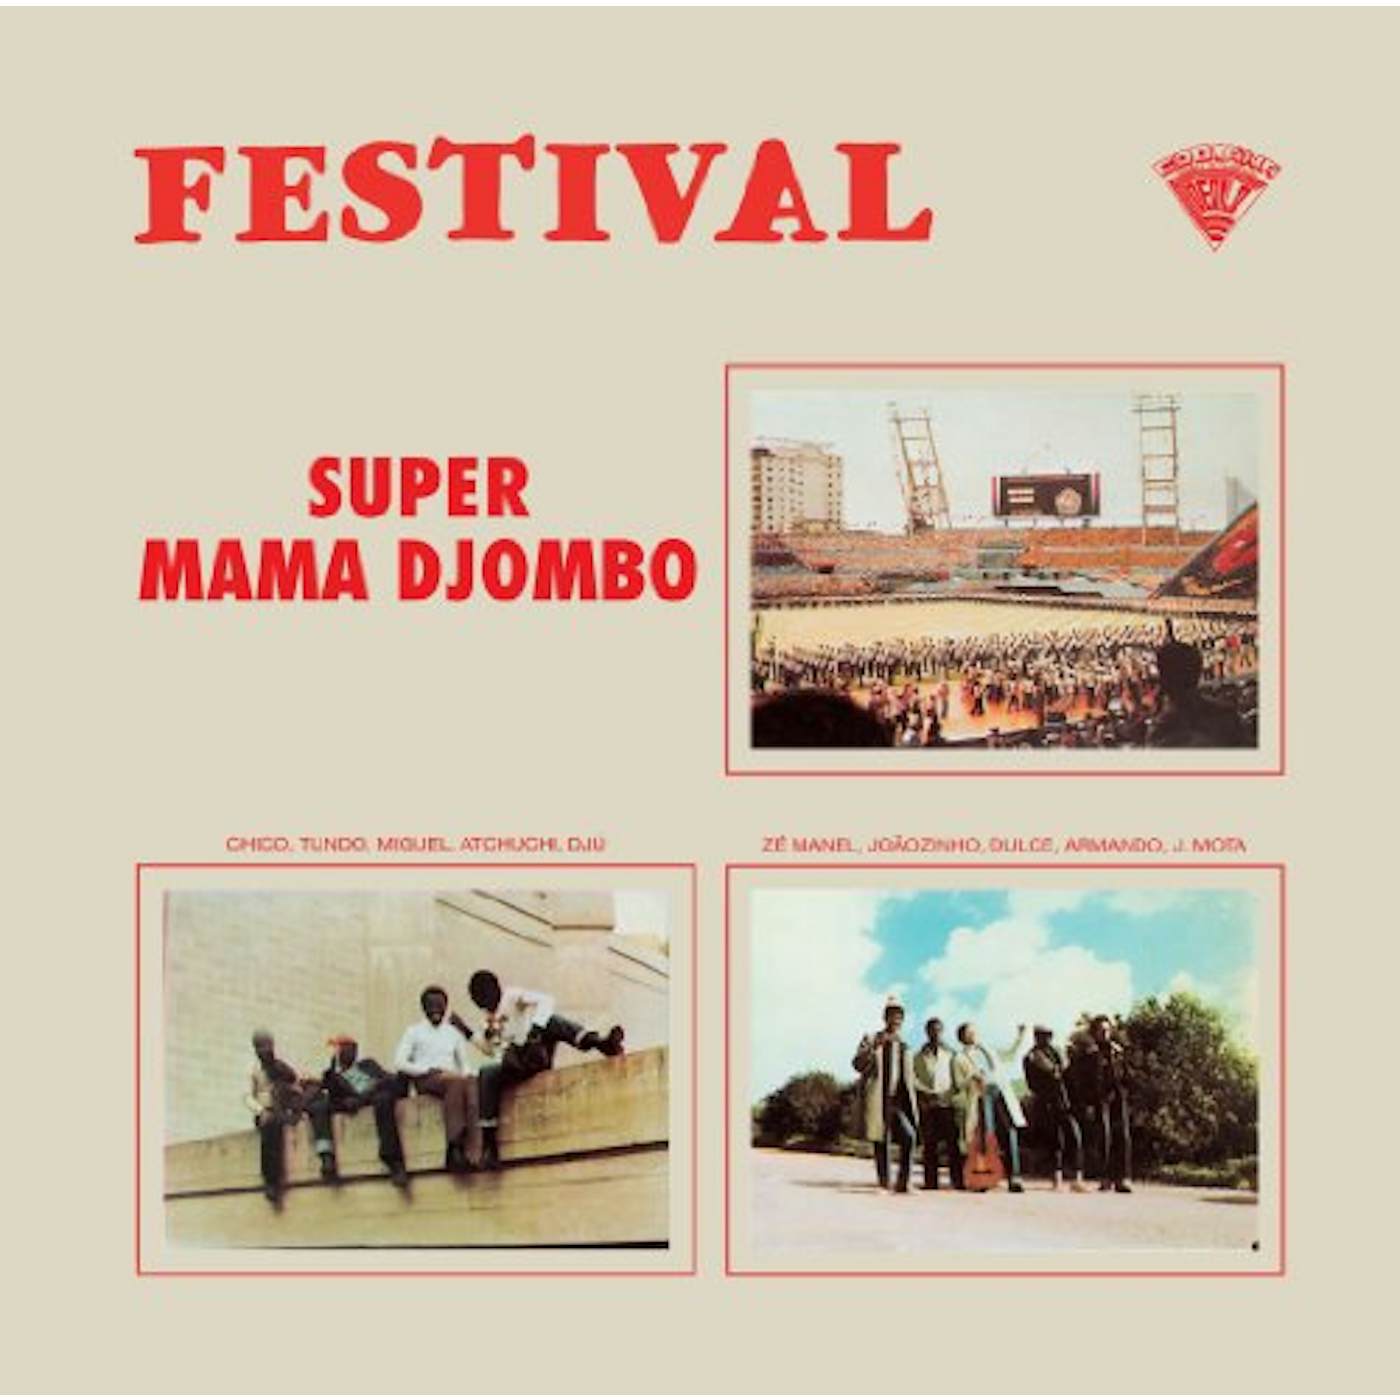 Super Mama Djombo Festival Vinyl Record